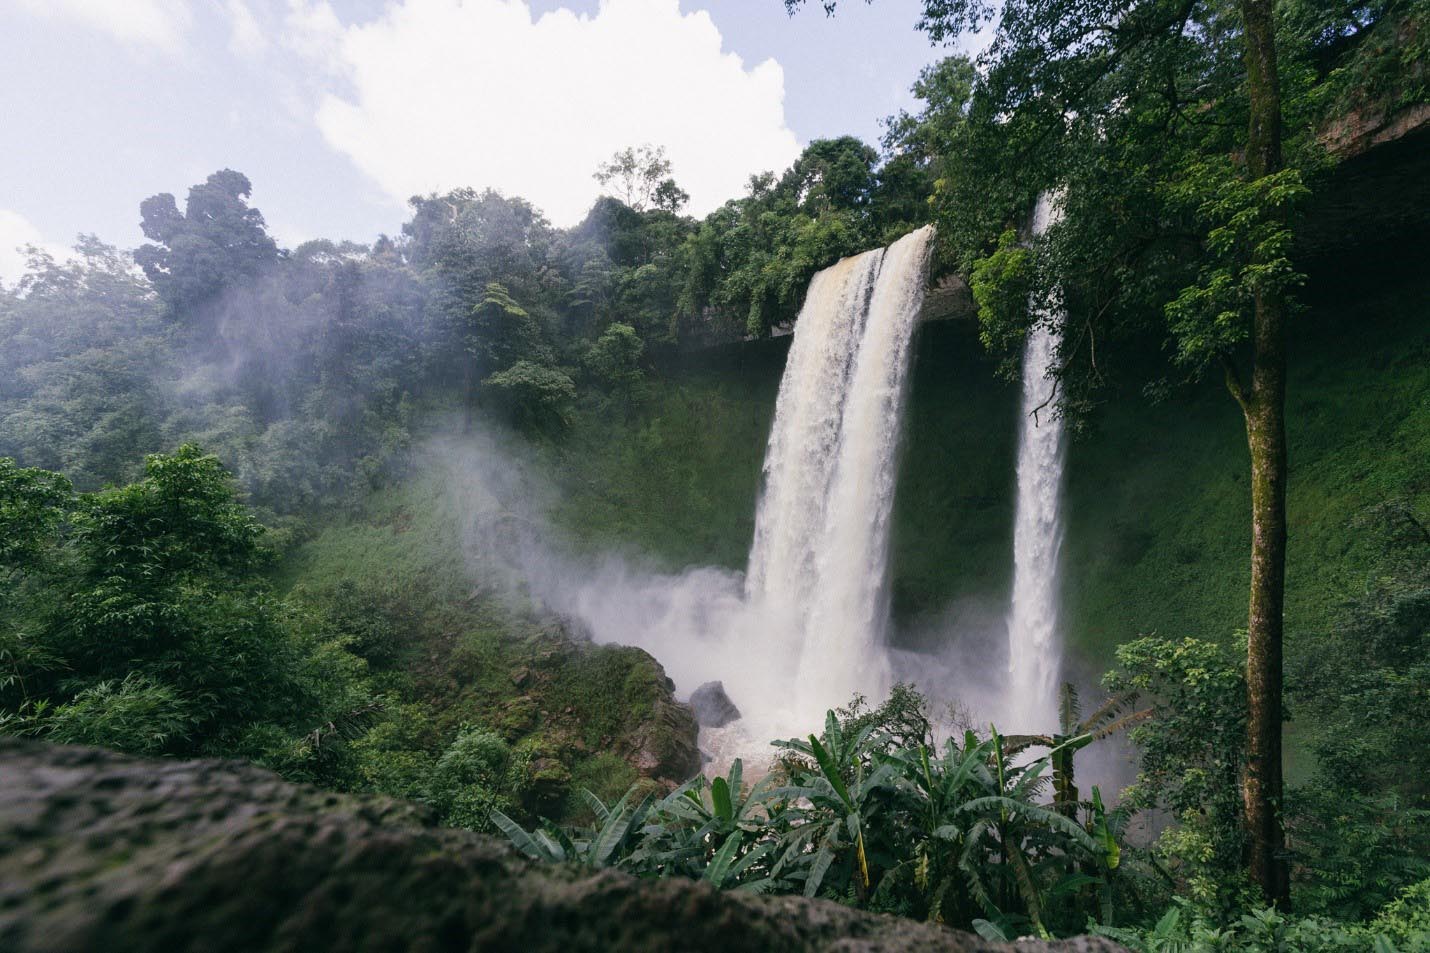 Discover the majestic beauty of Dak G’lun Waterfall in Dak Nong